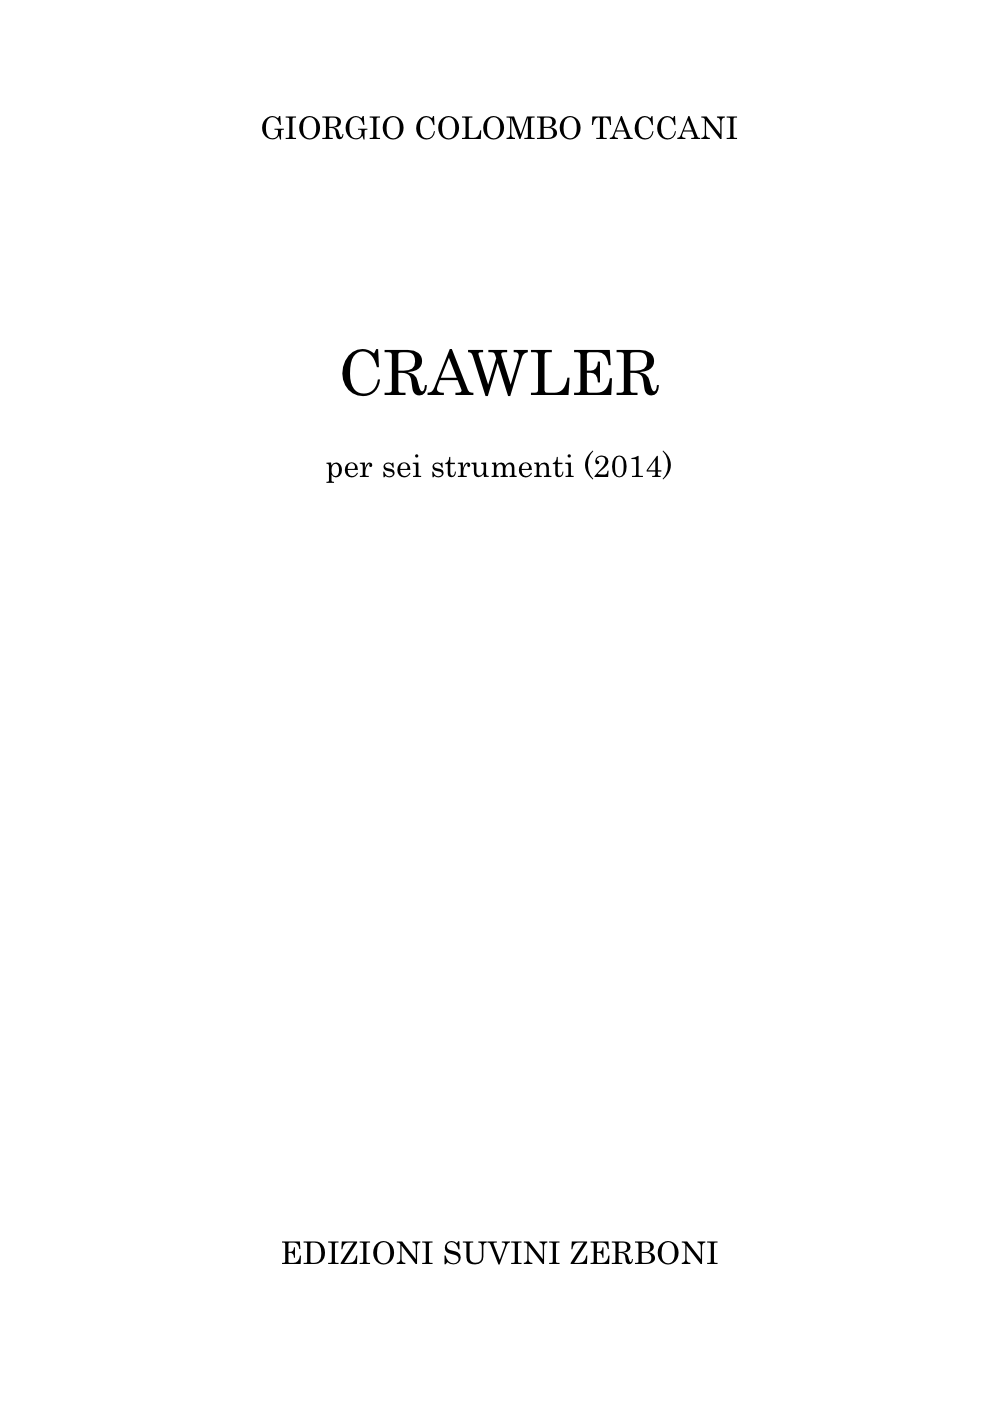 Crawler_Colombo Taccani 1